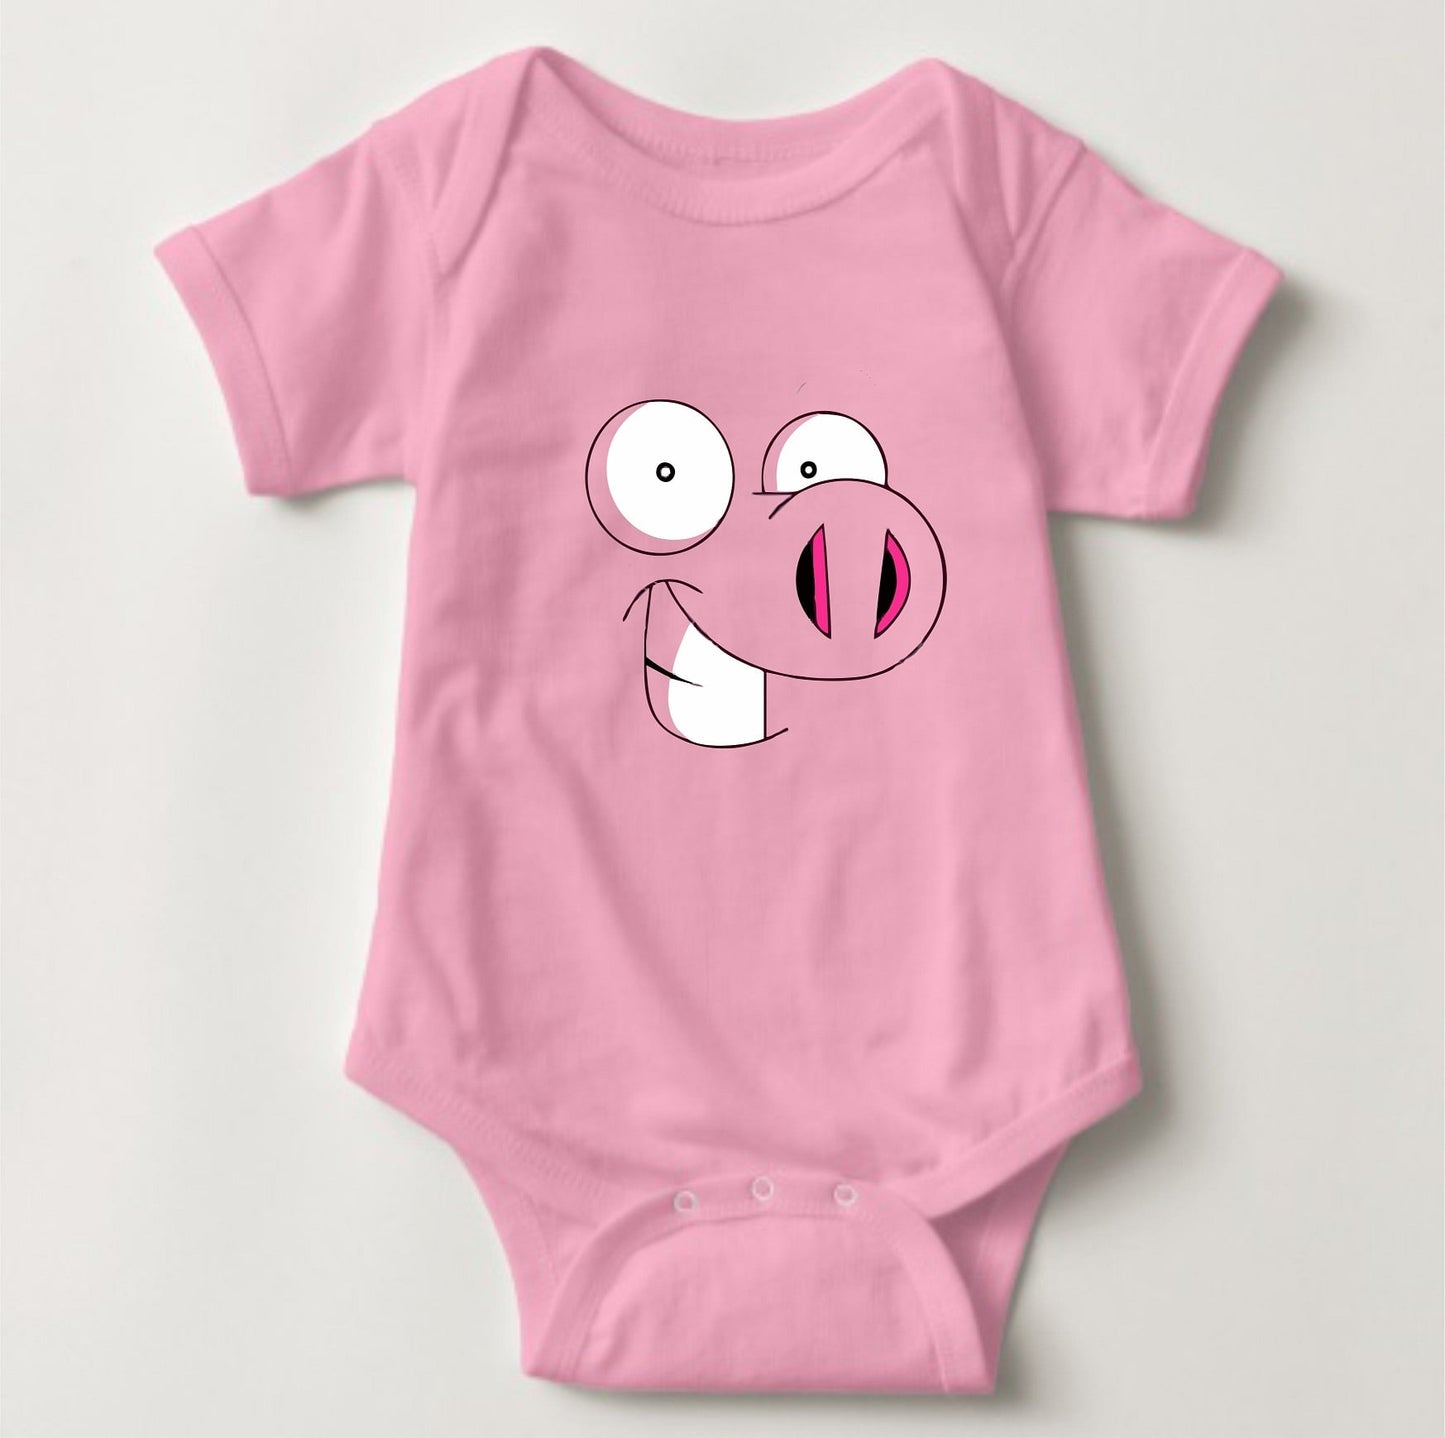 Baby Character Onesies - Pink Pig